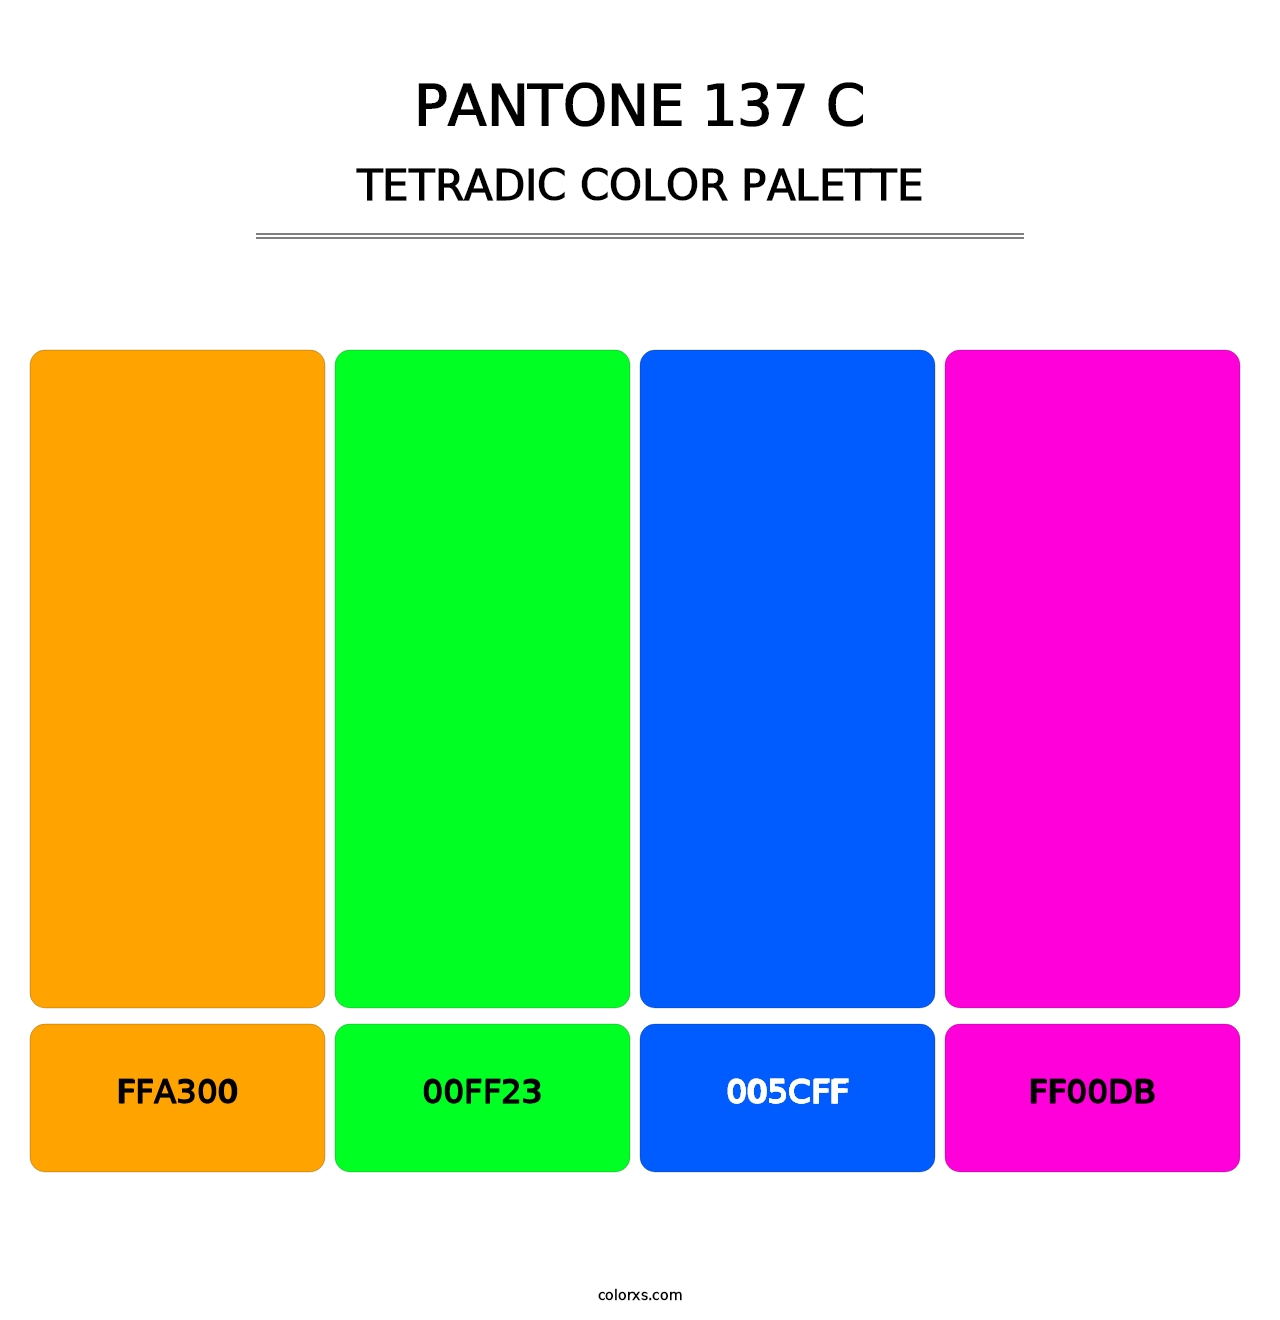 PANTONE 137 C - Tetradic Color Palette